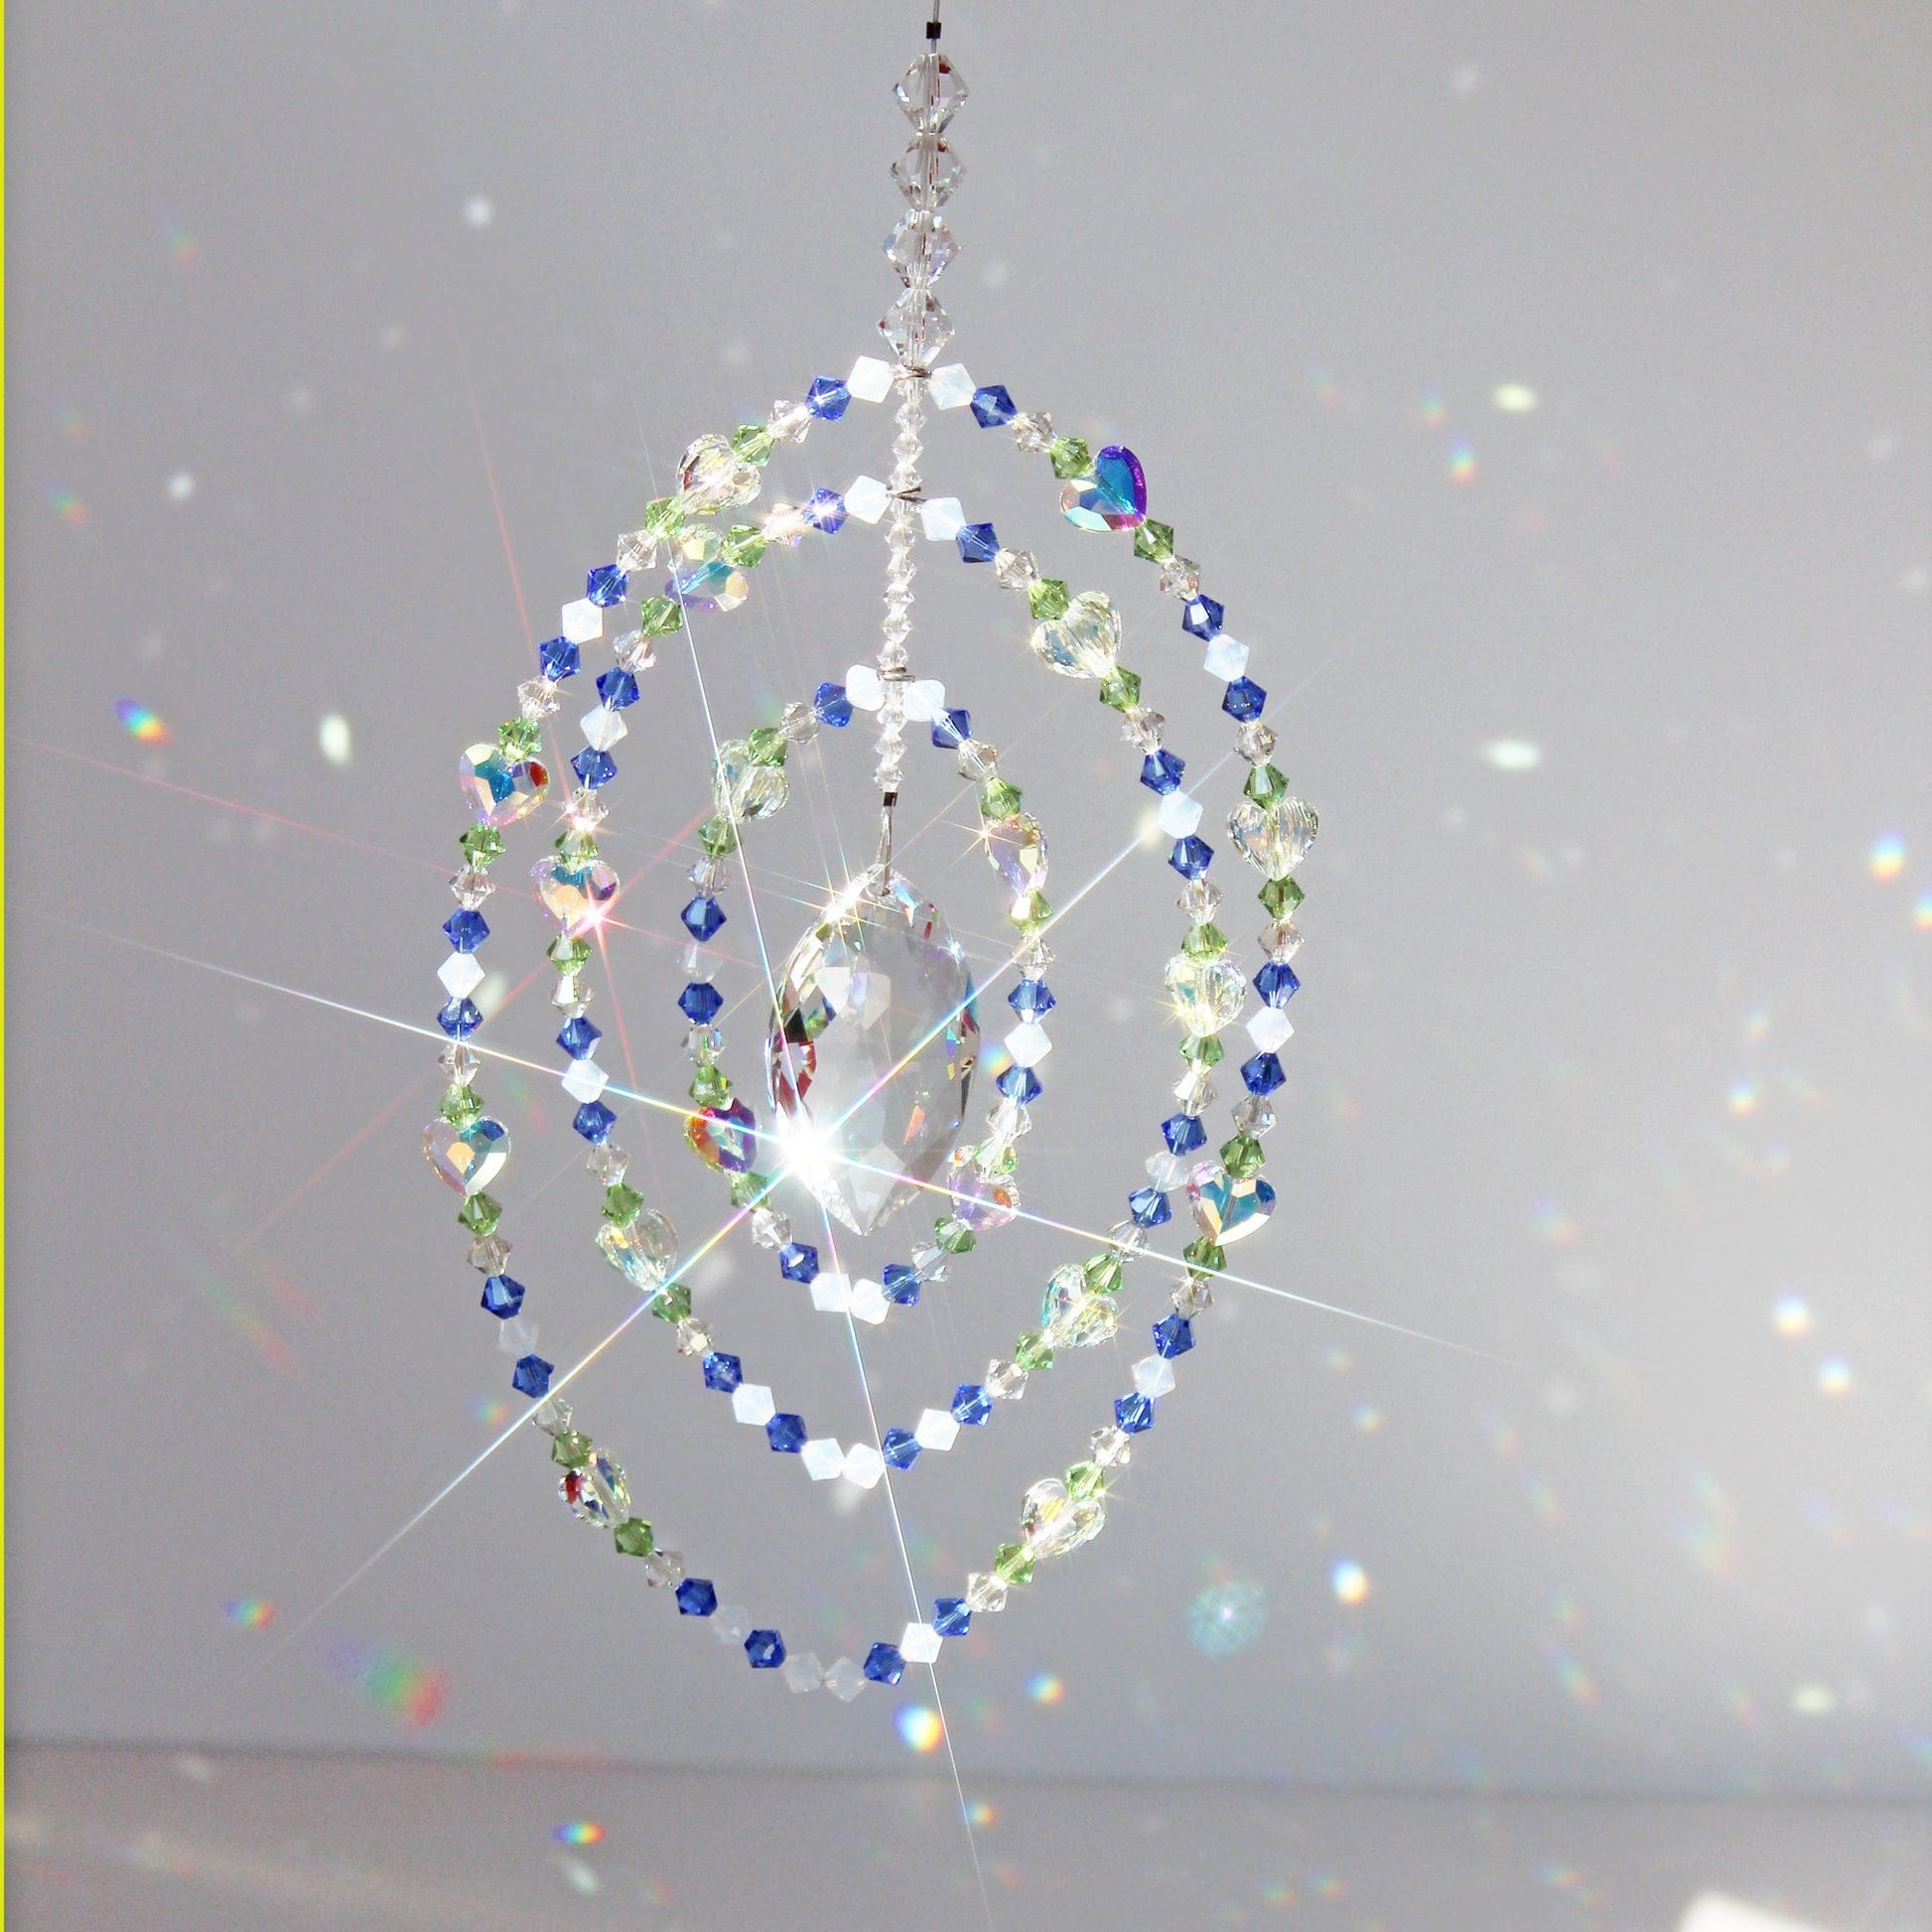 Exquisite Crystal Mobile Pendulum, Window Suncatcher, Sunlight Catcher, Feng Shui Decor, Swarovski Marquis Prism